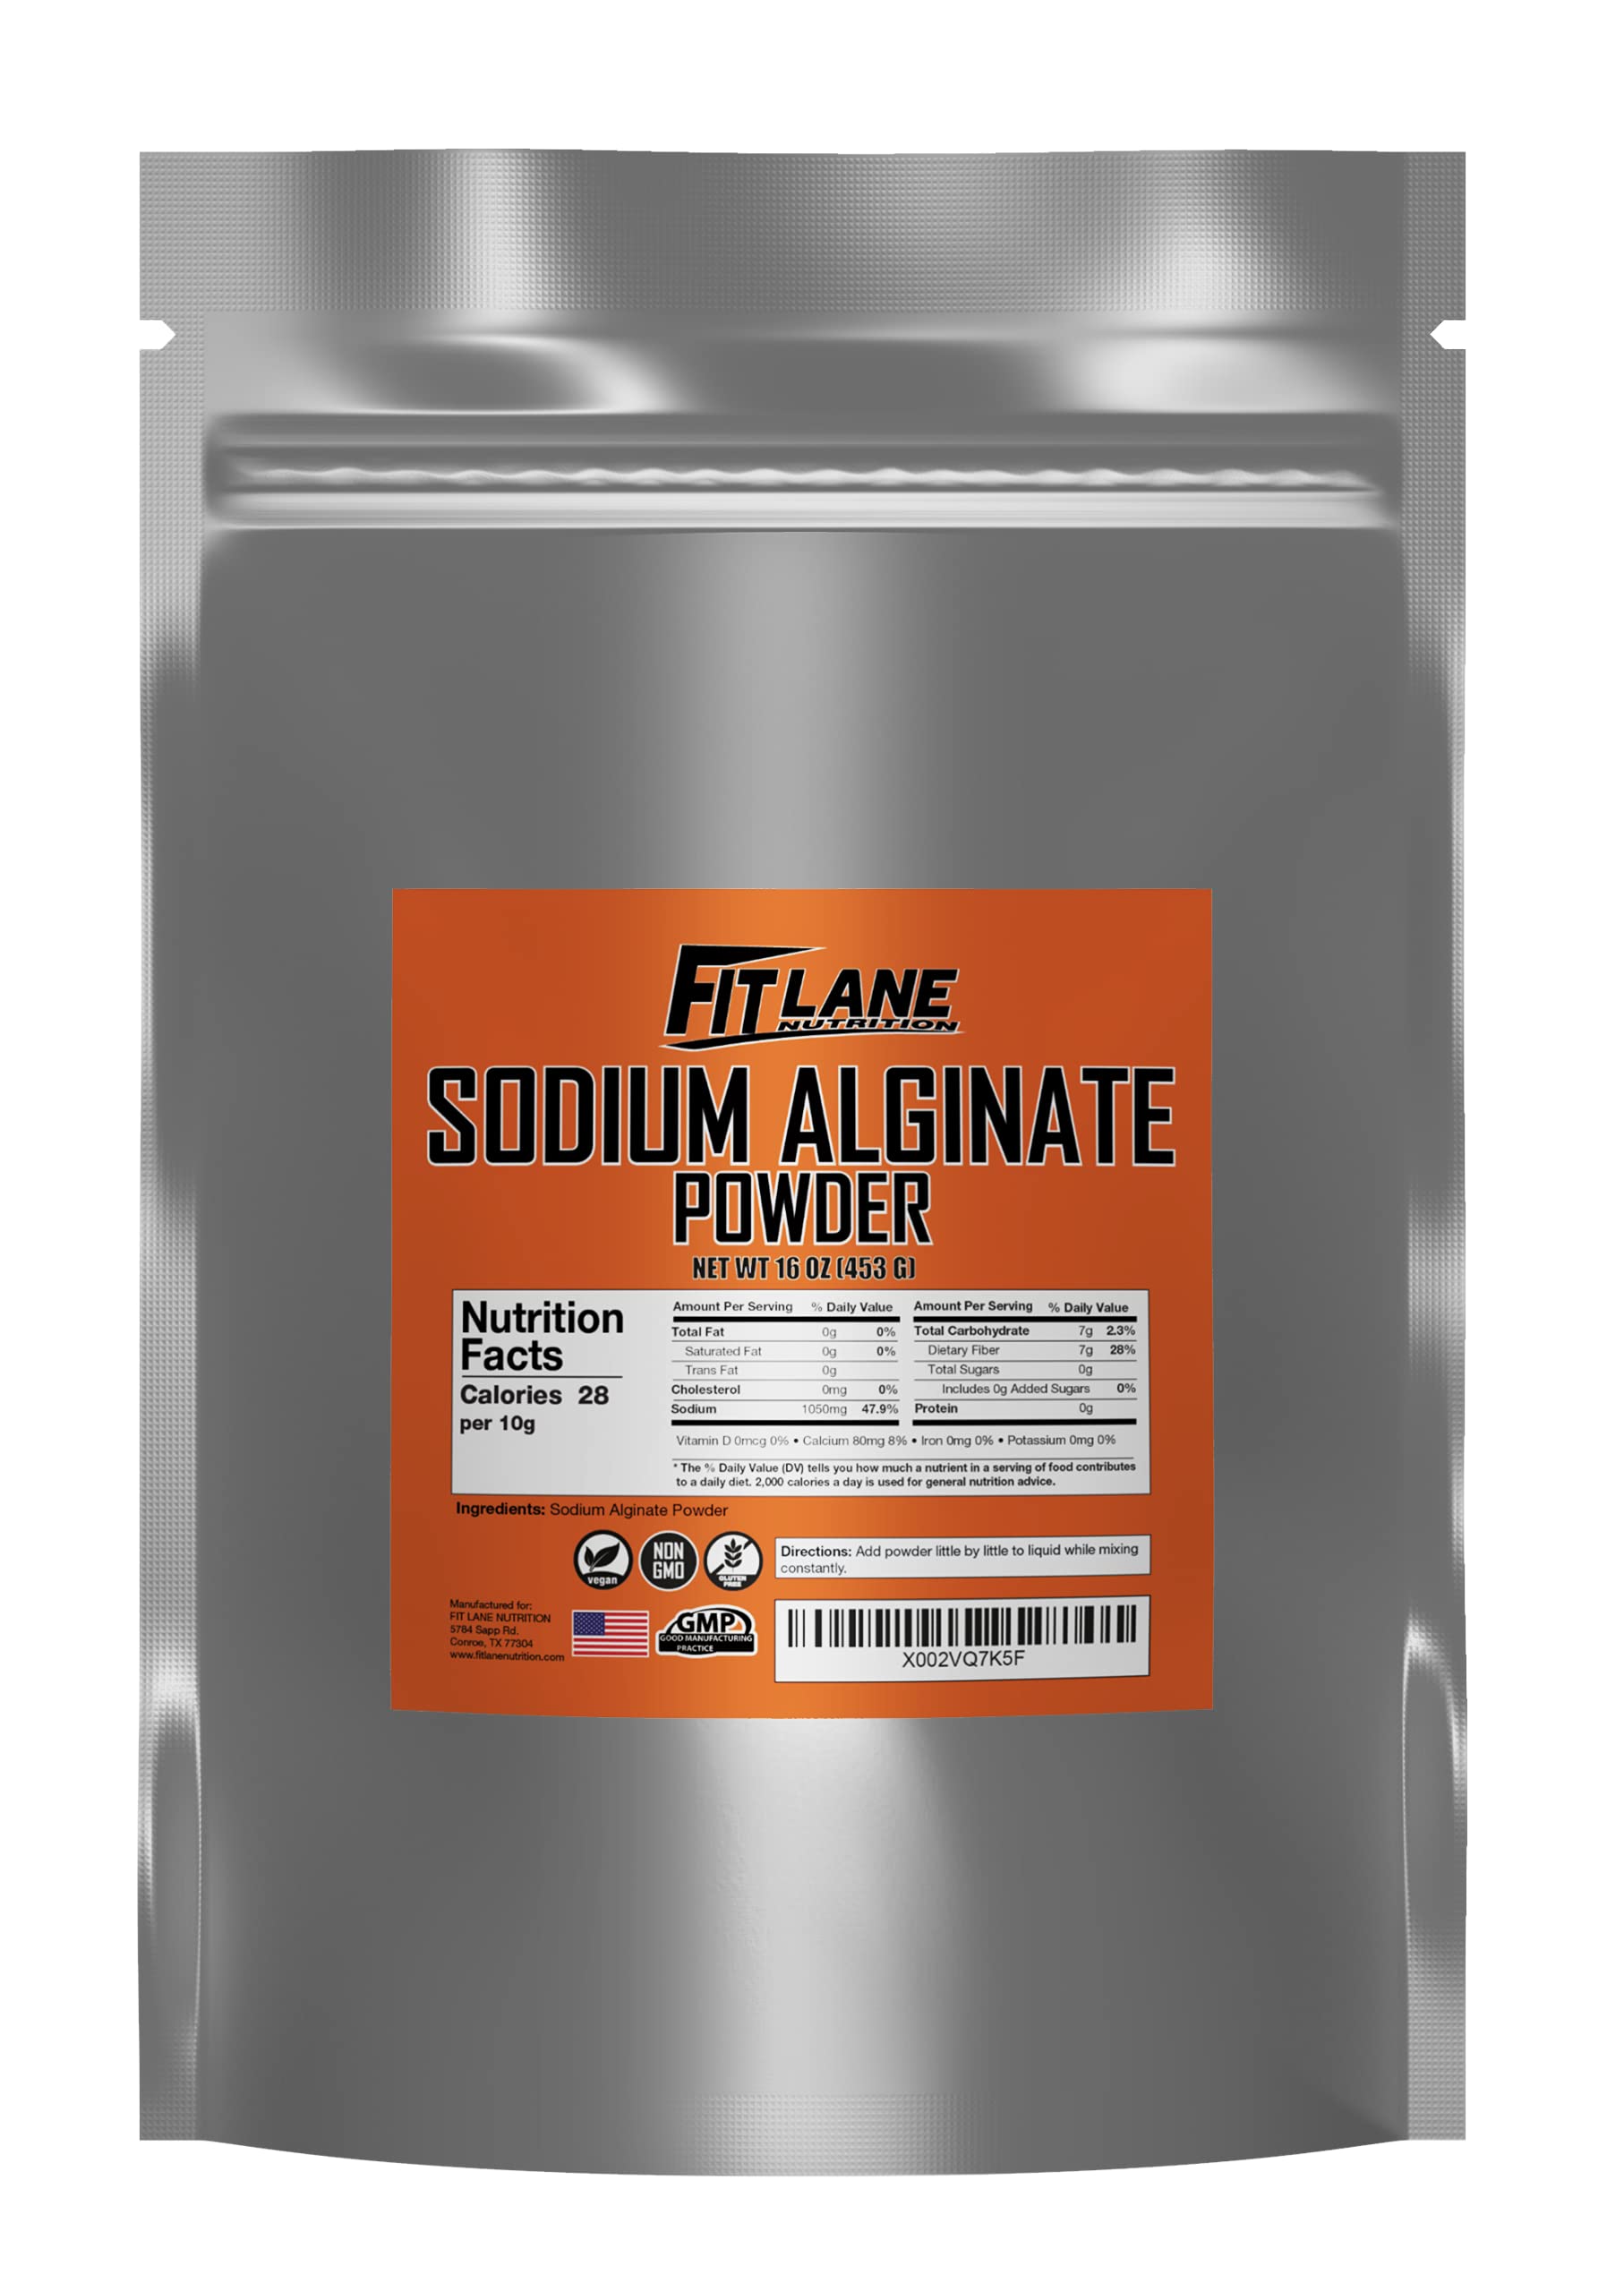 Sodium Alginate Powder, Food Grade Bulk Powder for Thickening, Non